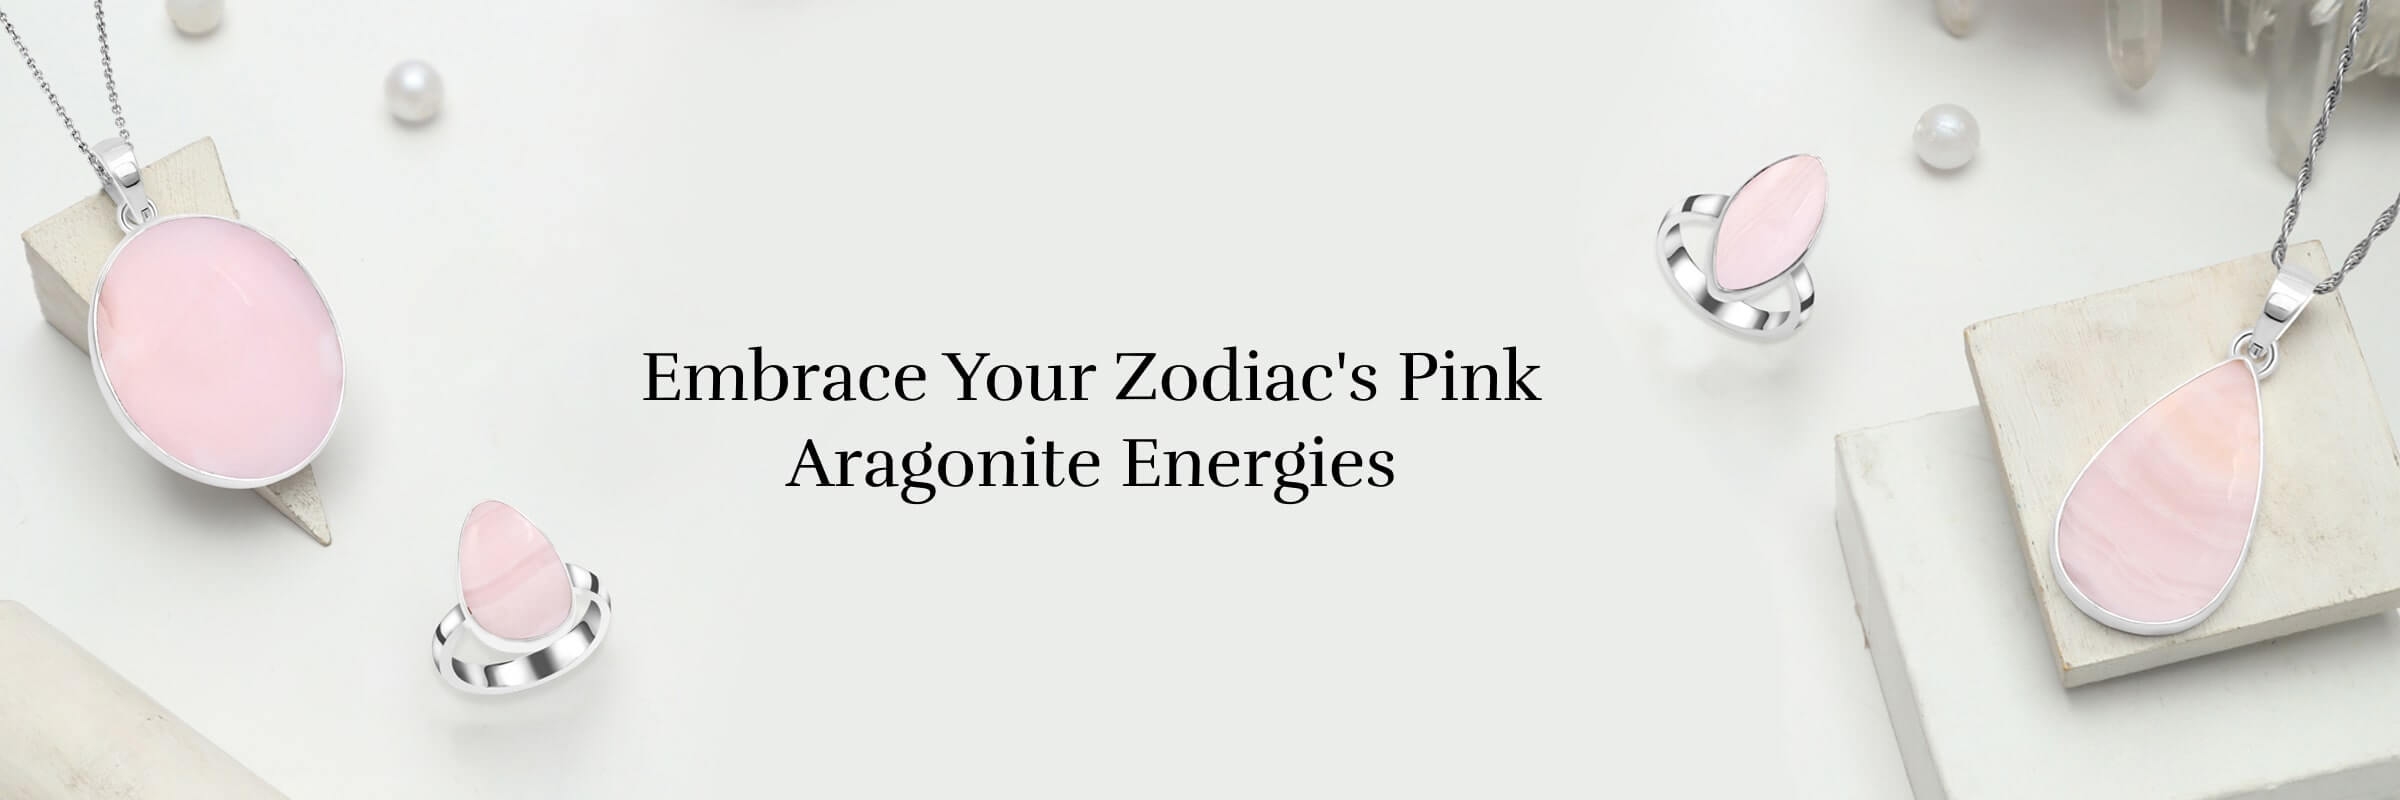 Pink Aragonite Zodiac sign